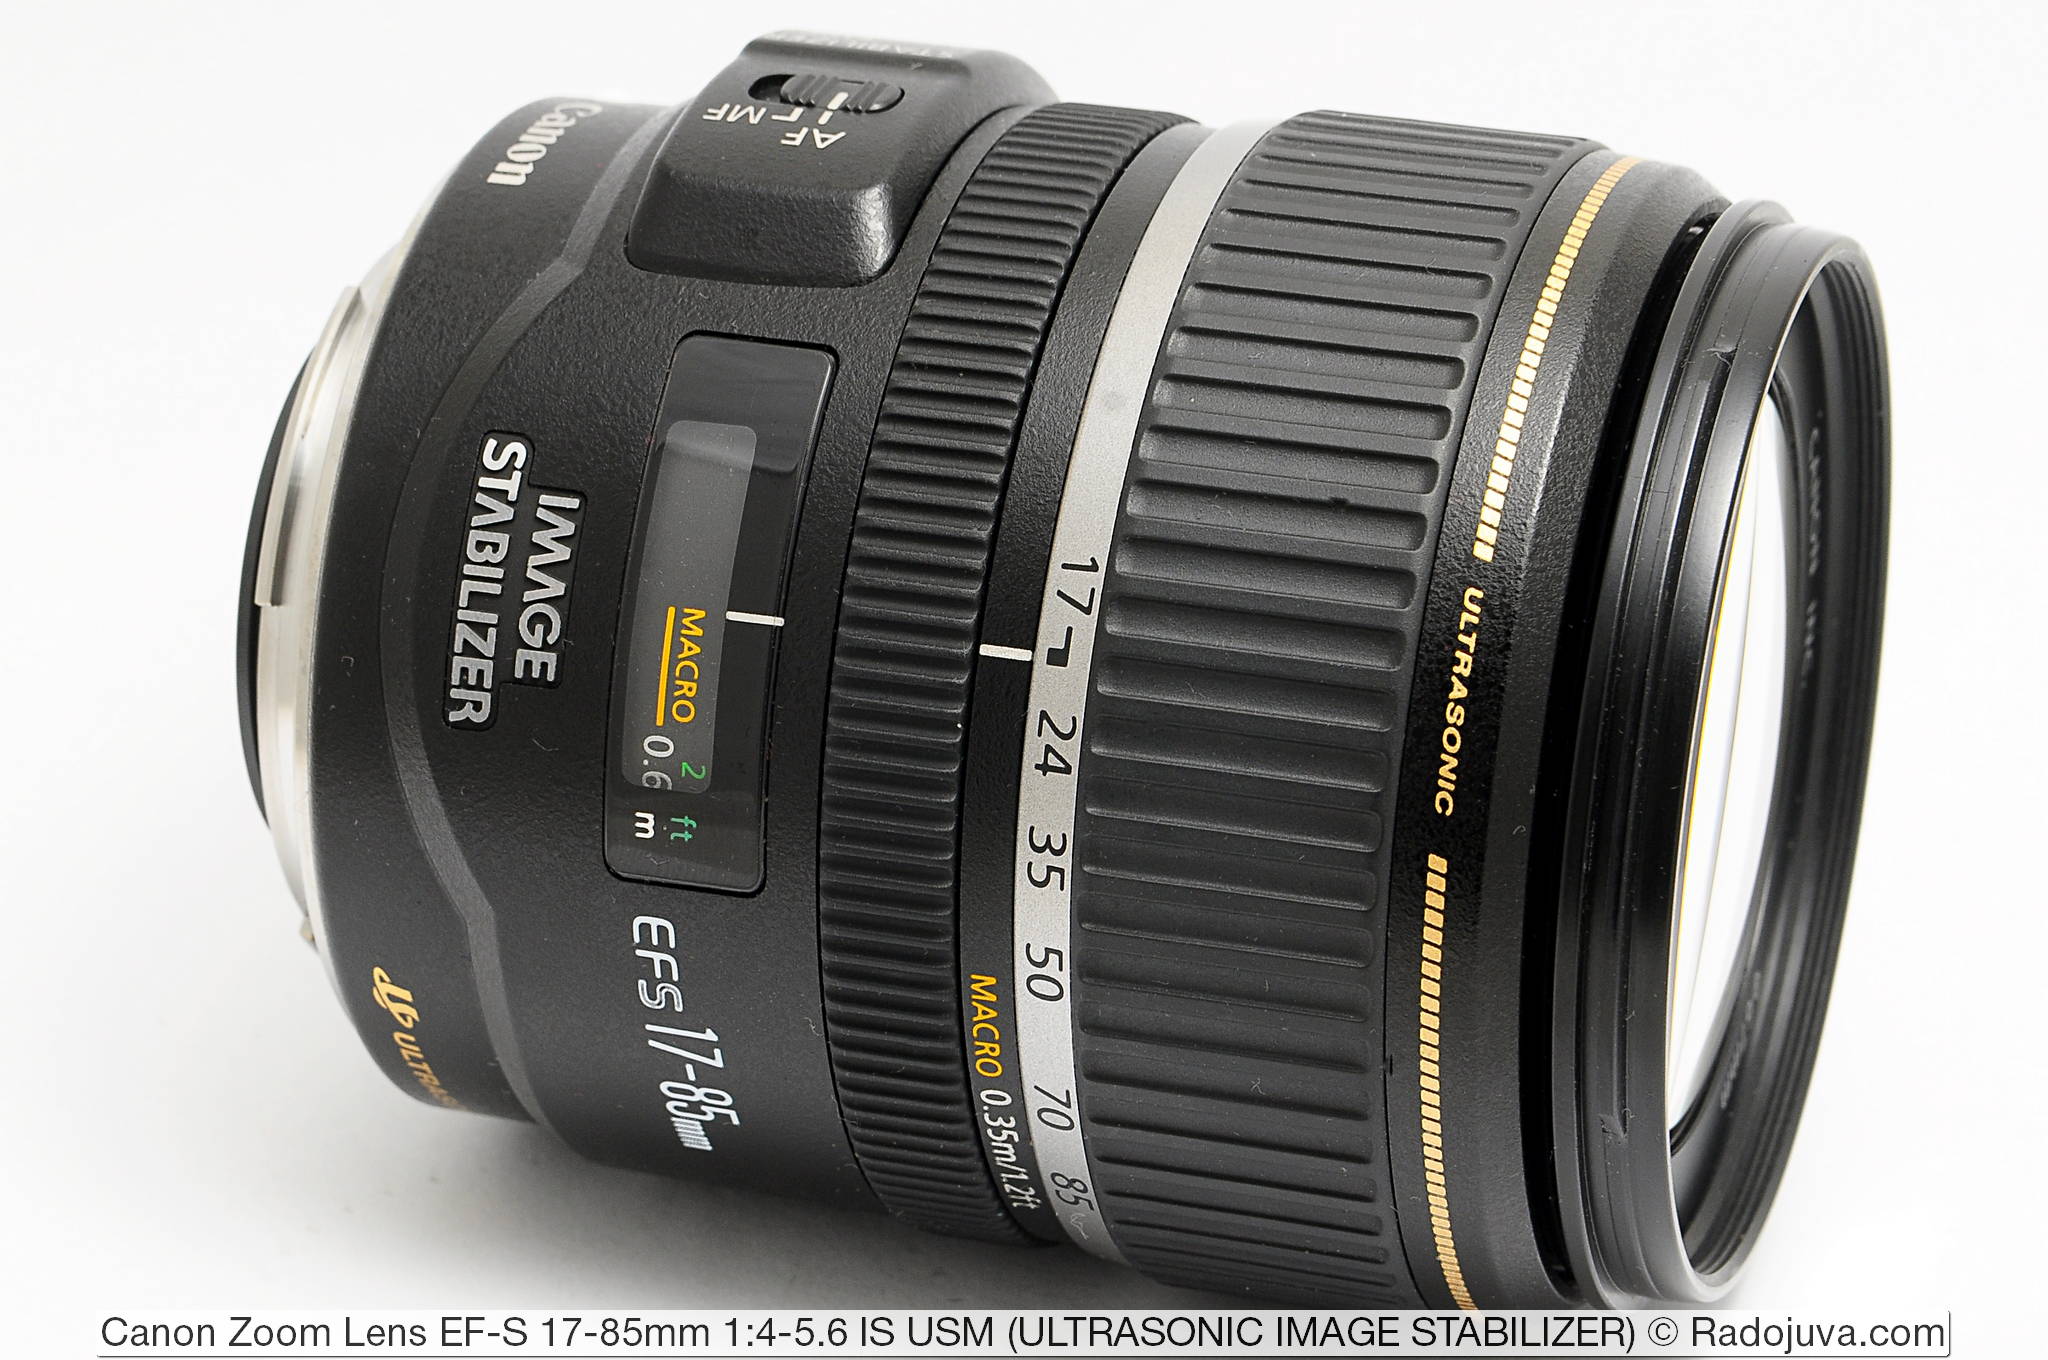 Canon Zoom Lens EF-S 17-85mm 1:4-5.6 IS USM